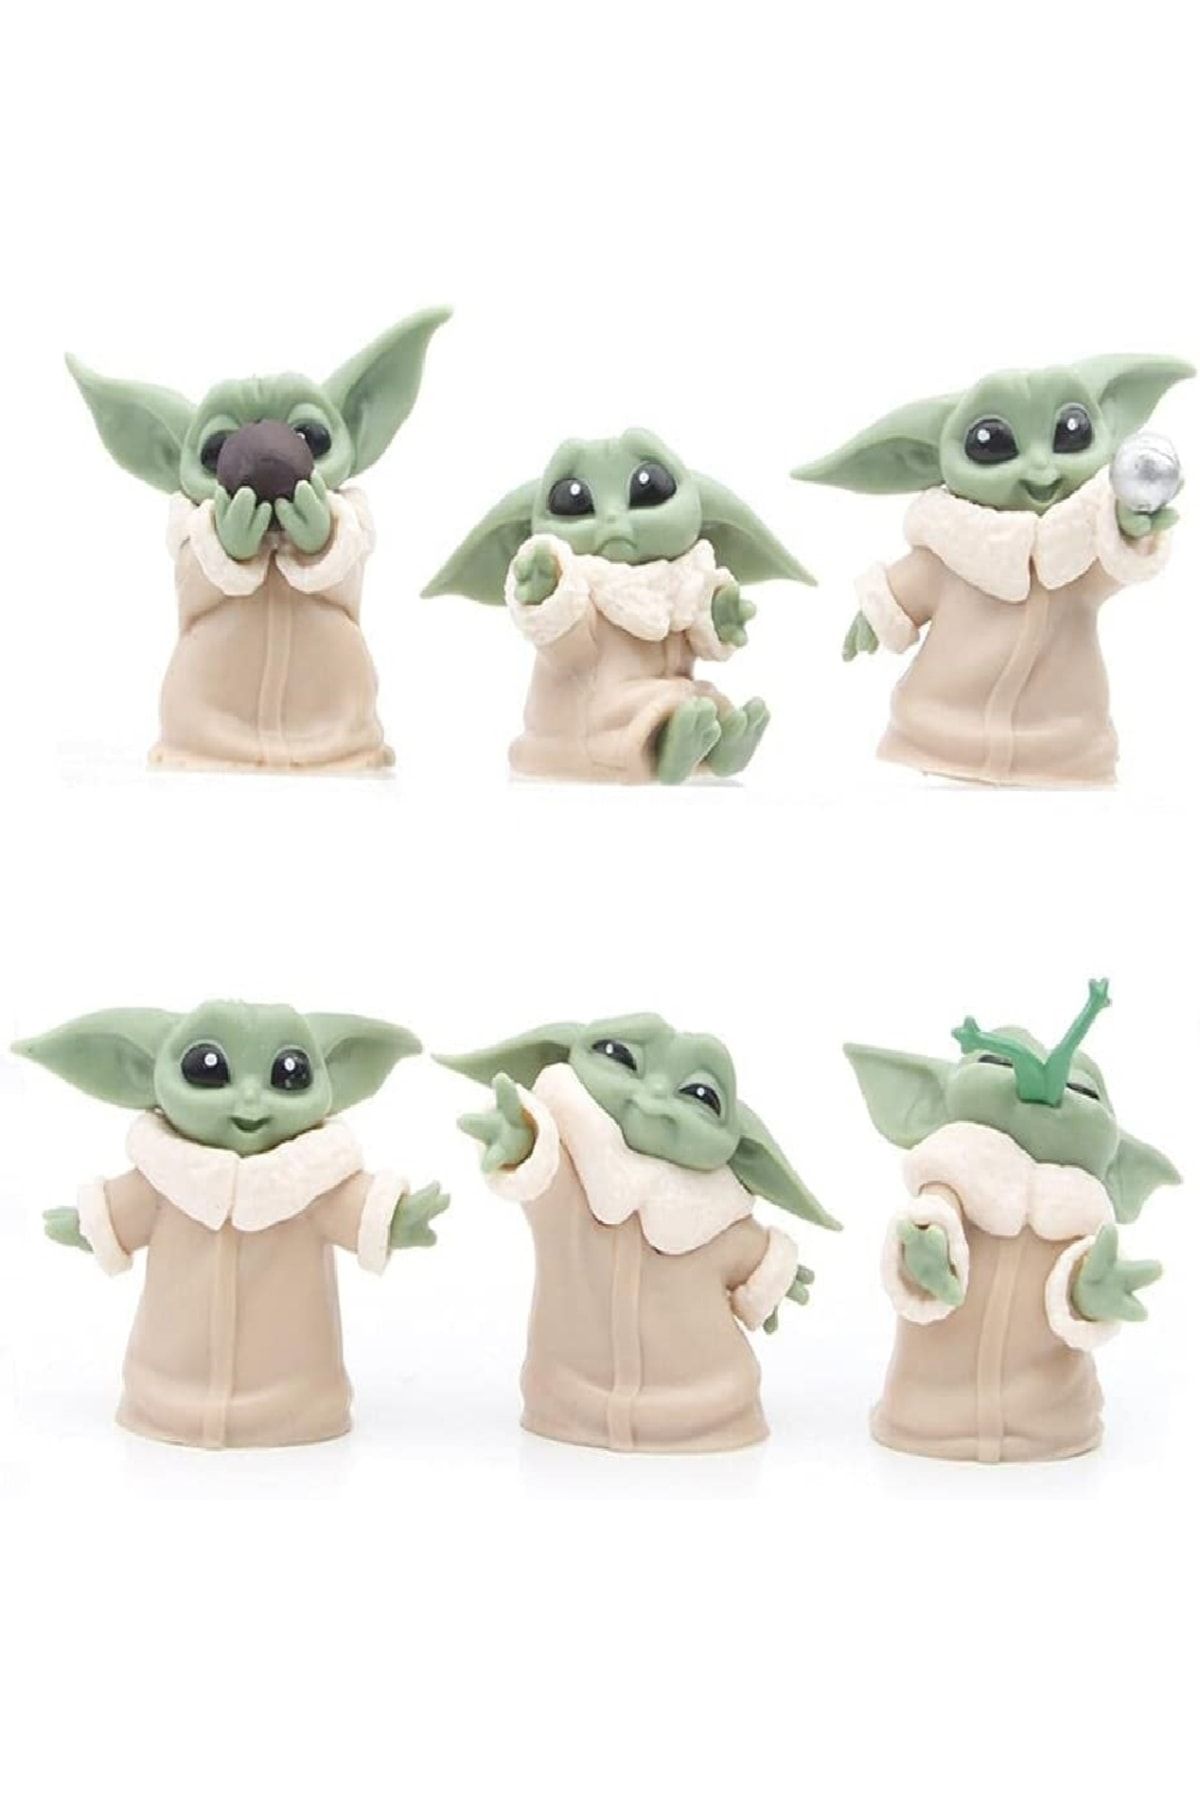 HEPBİMODA Star Wars 6lı Baby Yoda Figür Seti